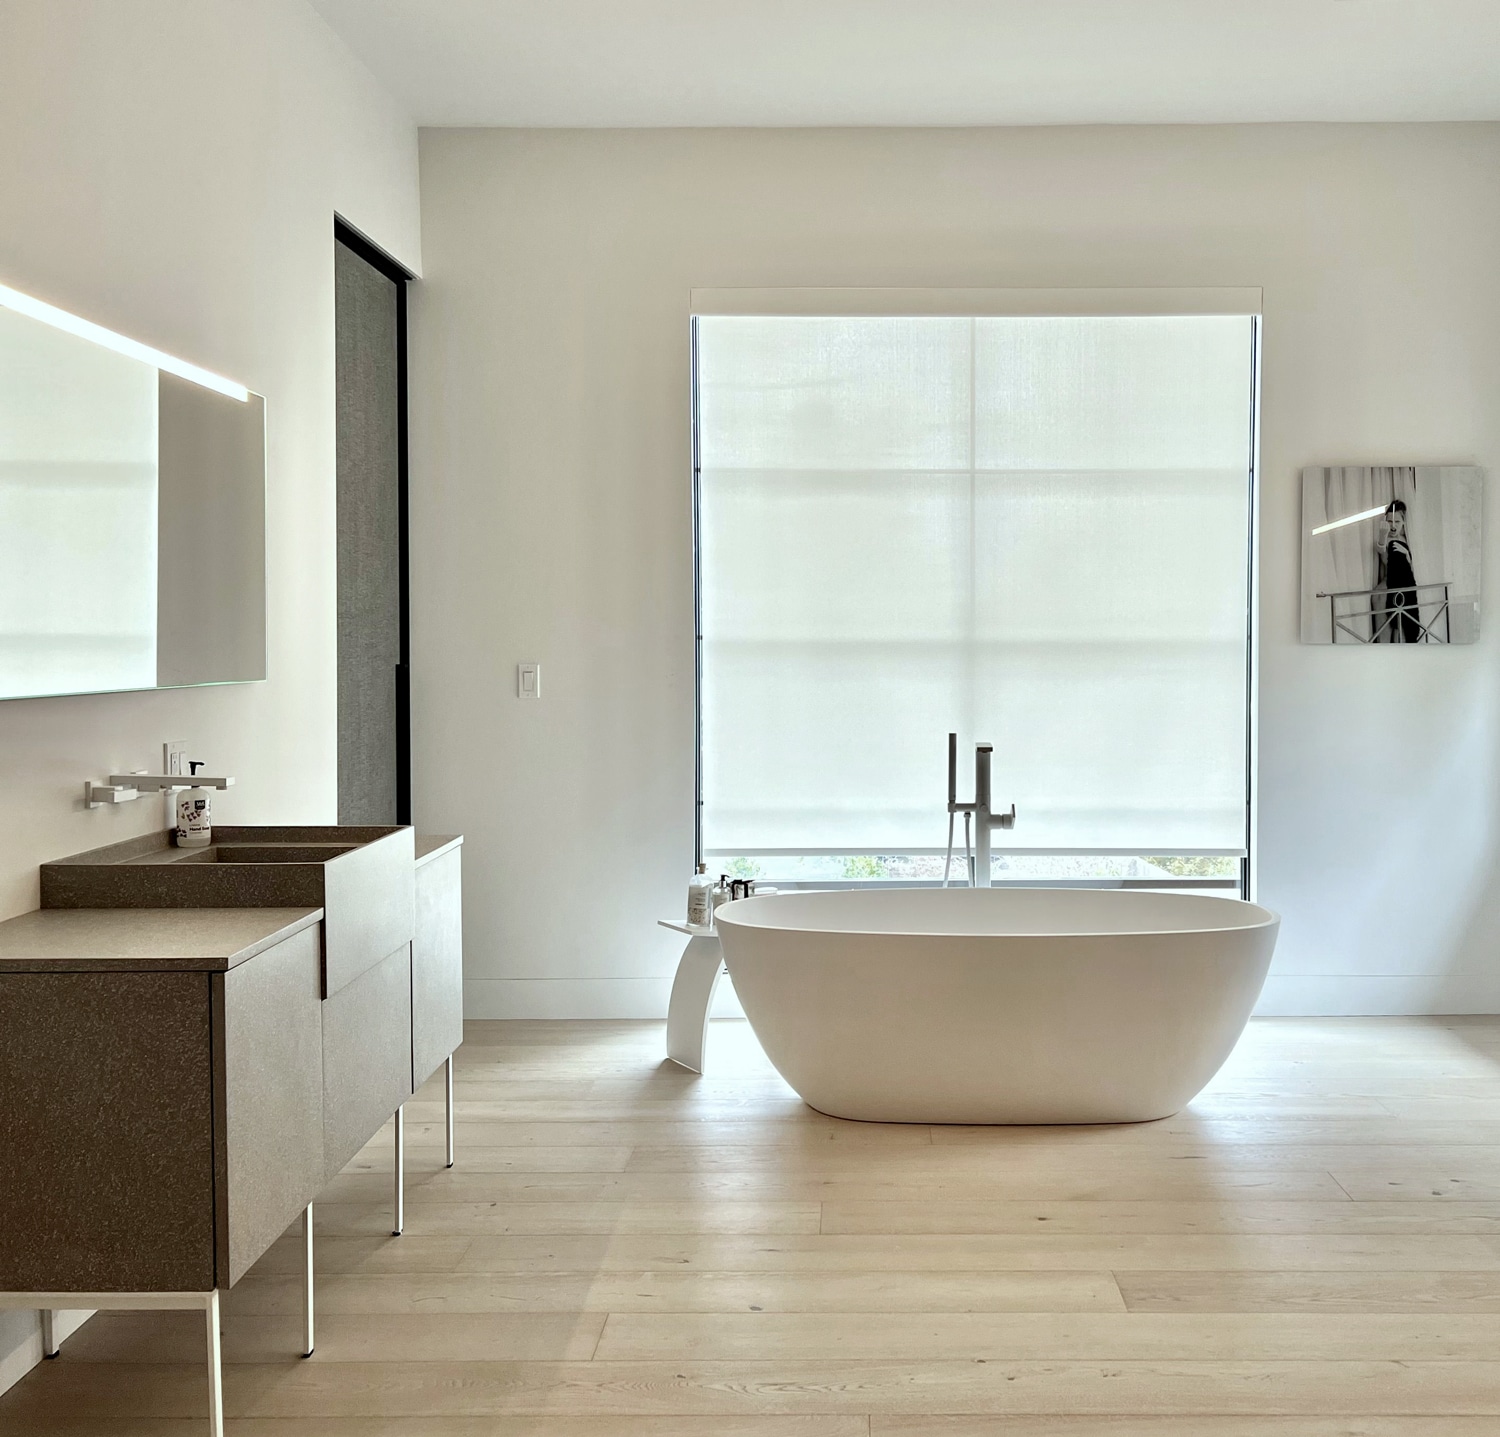 Red Bank, New Jersey. Quari bathroom cabinetry in Terrazzo finish, Vanitas tab in solid surface. Design by Lorena Polon, Senior Design Consultant of MandiCasa, New York.